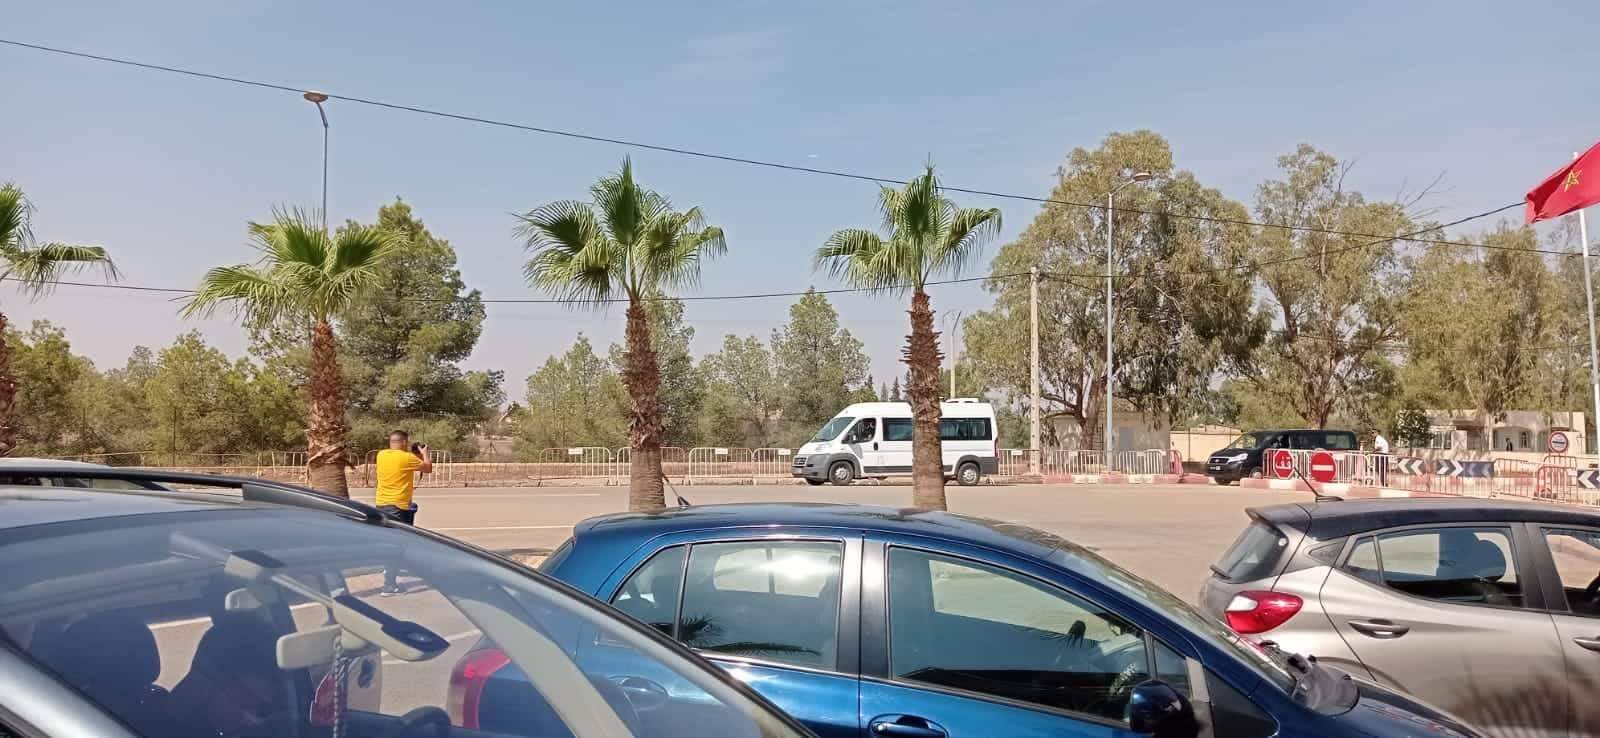 Minibus transportant les marocains rapatriés.